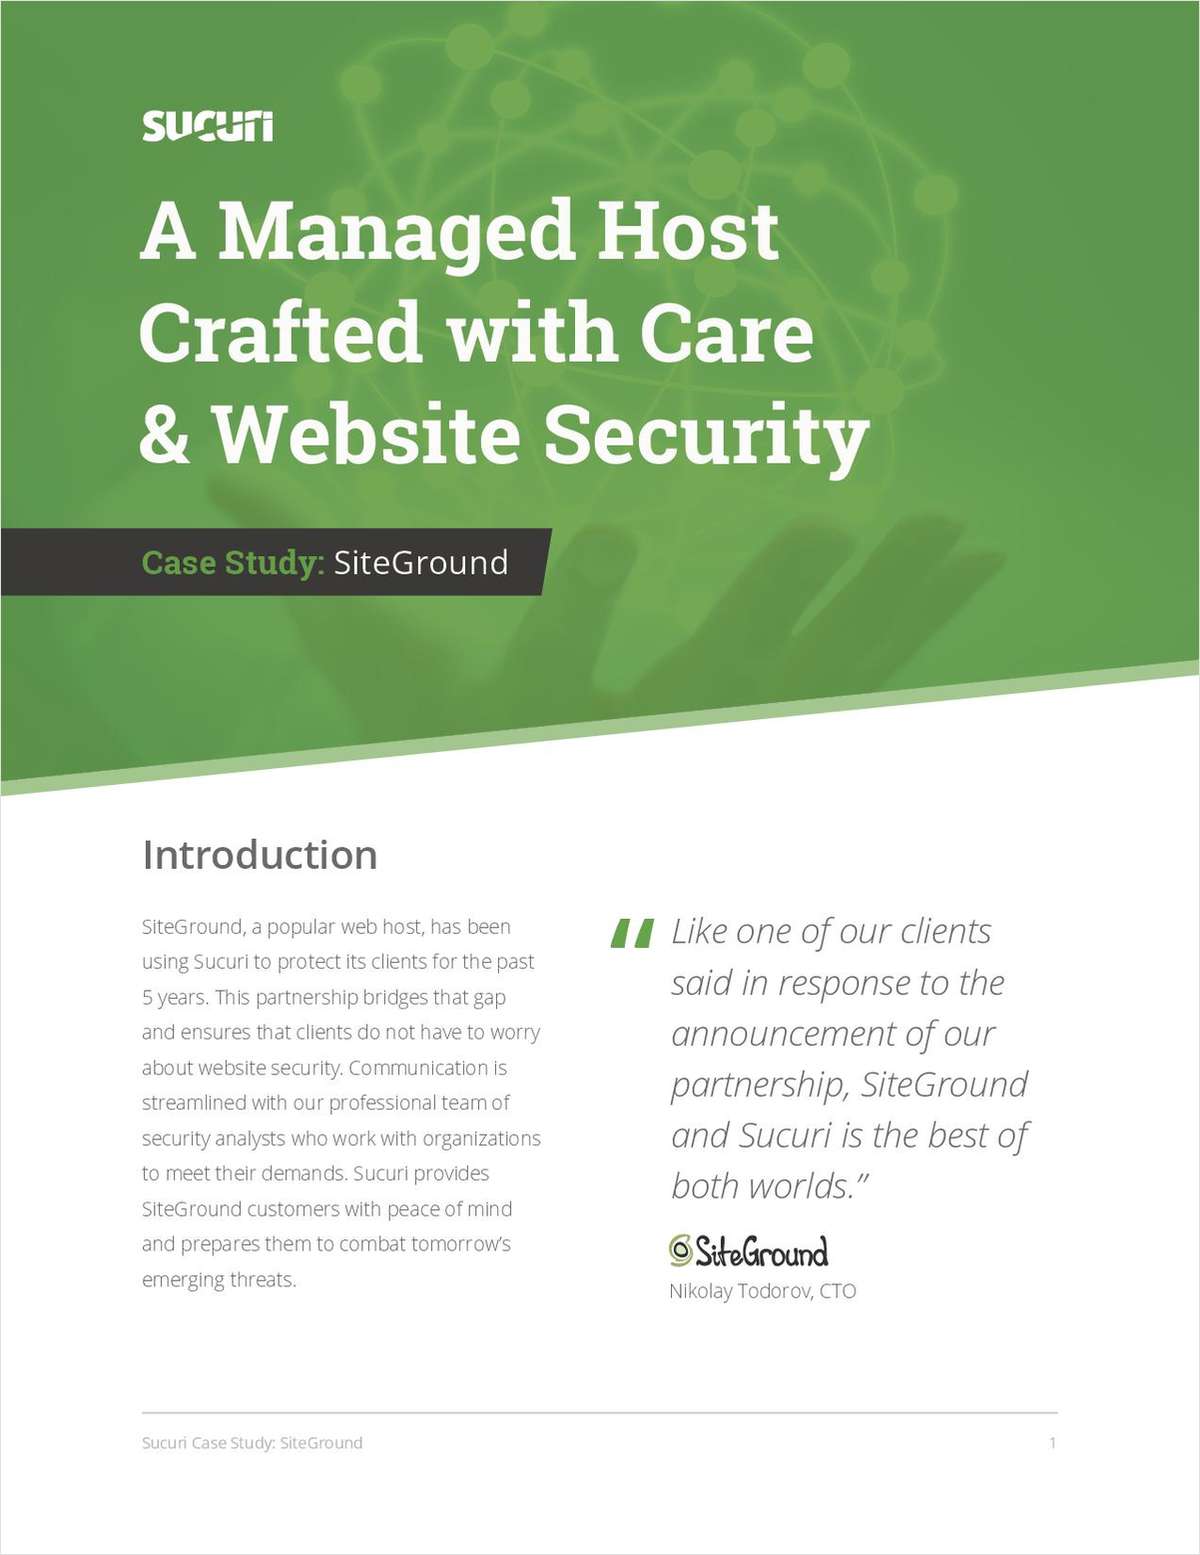 SiteGround: Website Security Case Study